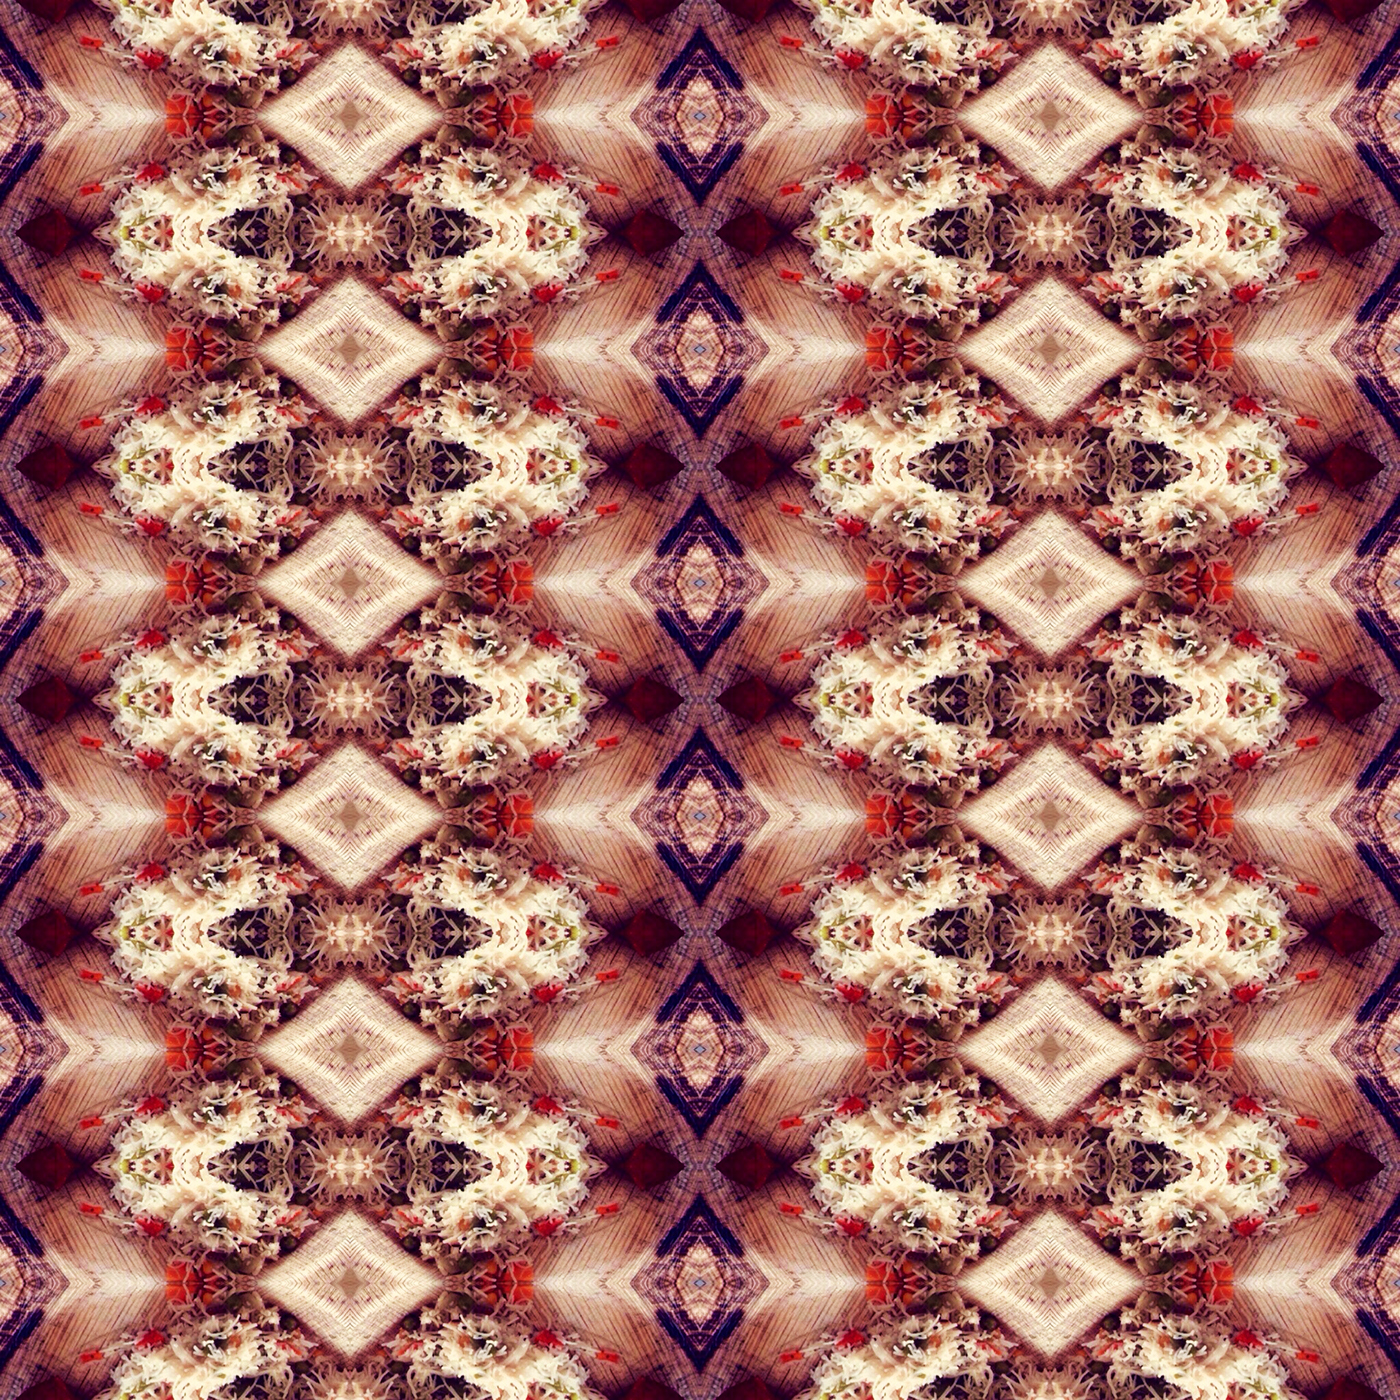 Food  pattern creative art design traditional mirror kaleidoscope subdued brown print